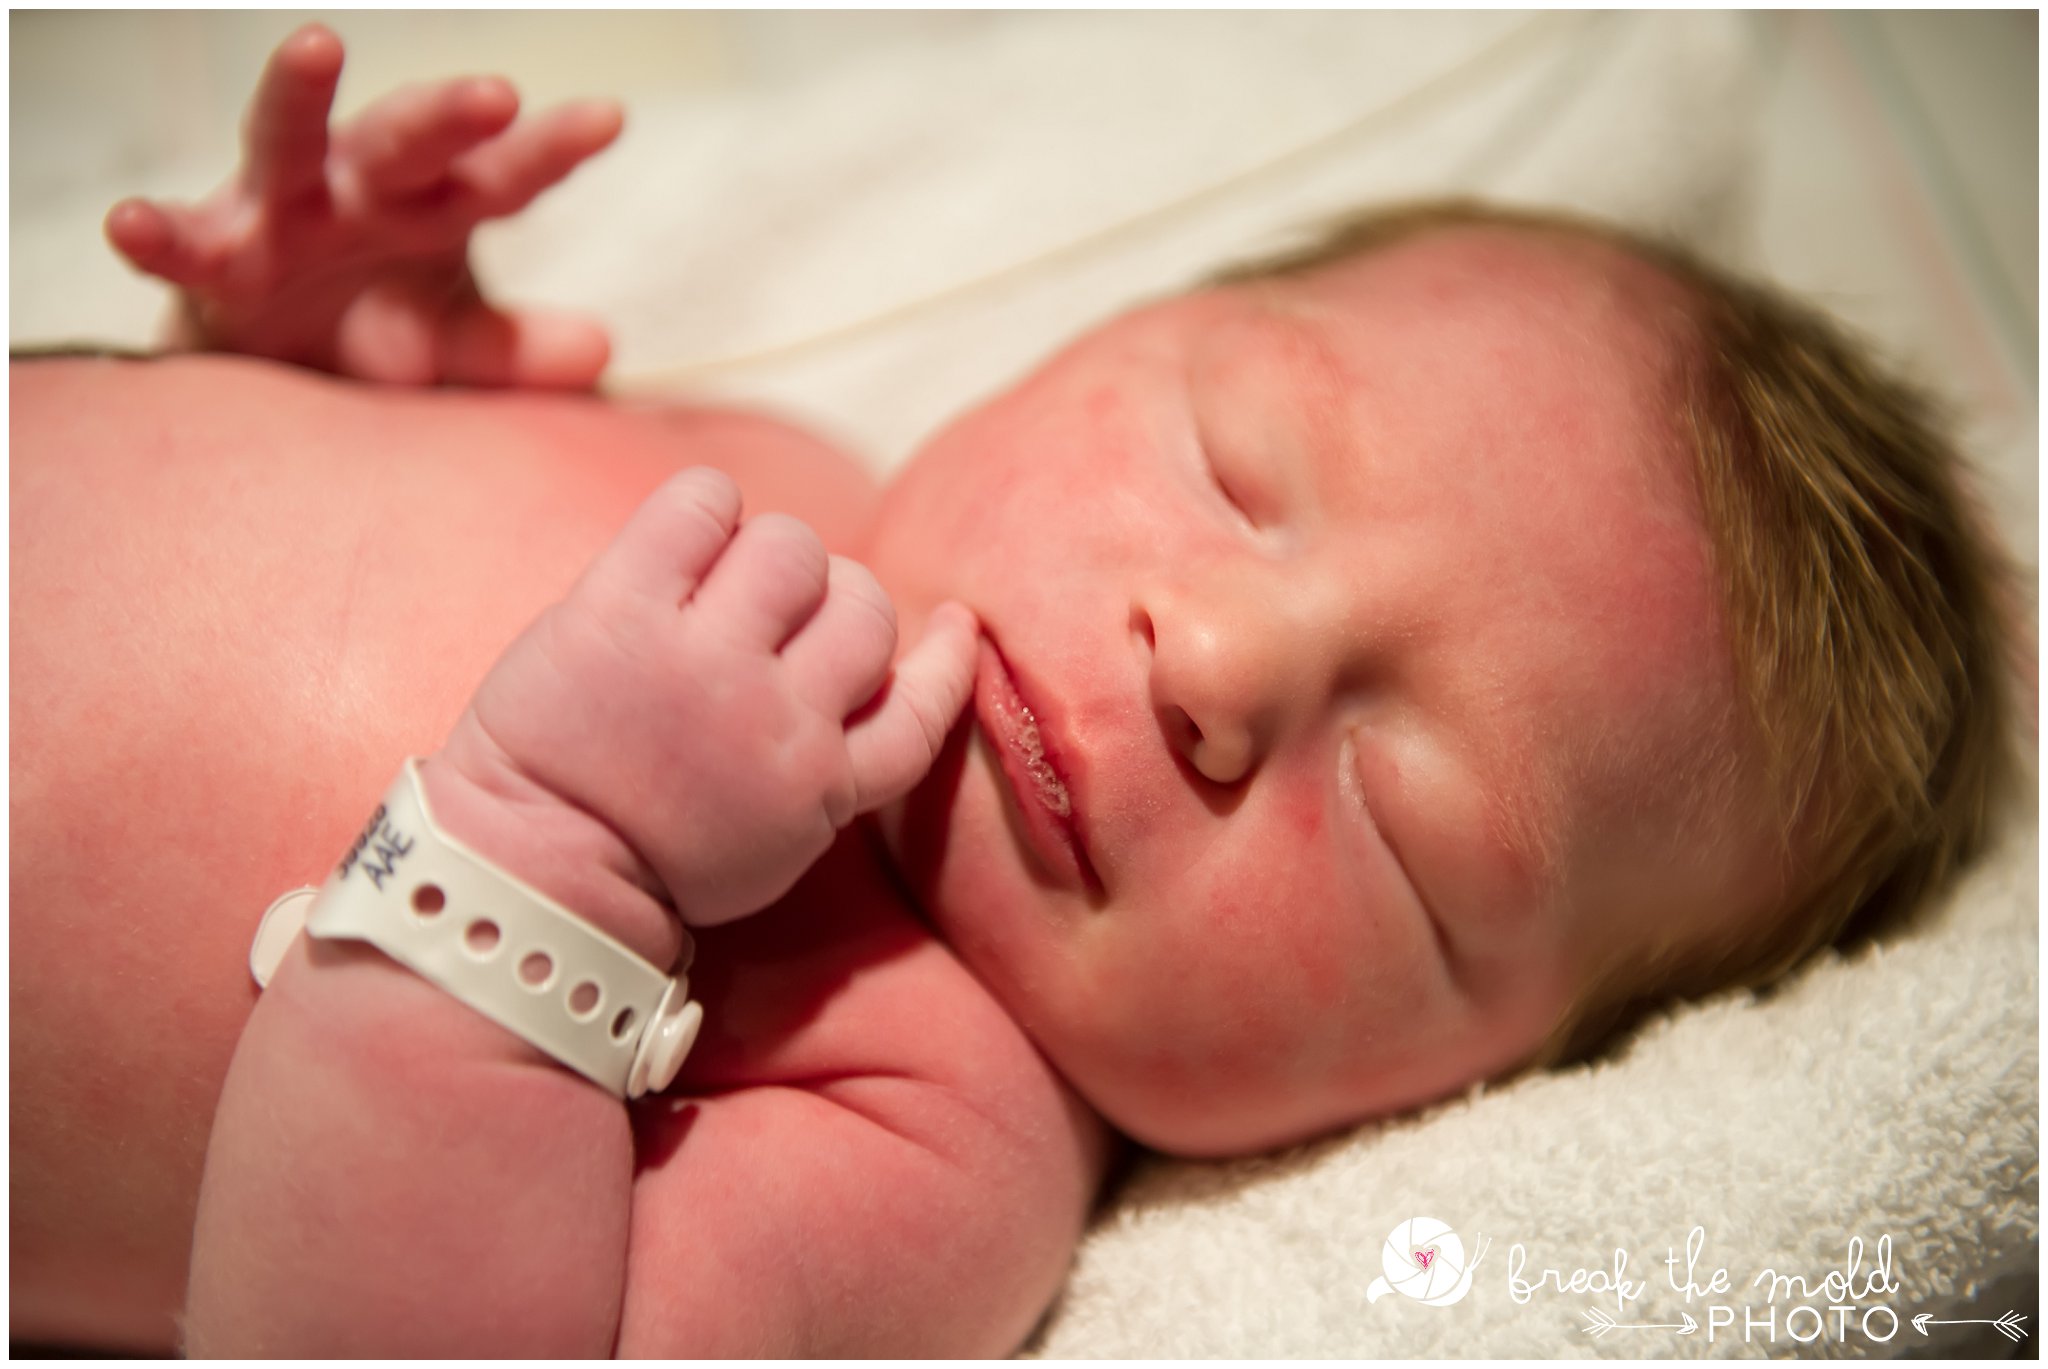 fresh-24-newborn-in-hospital-break-the-mold-photo-baby-girl-sweet-in-room-photos (8).jpg